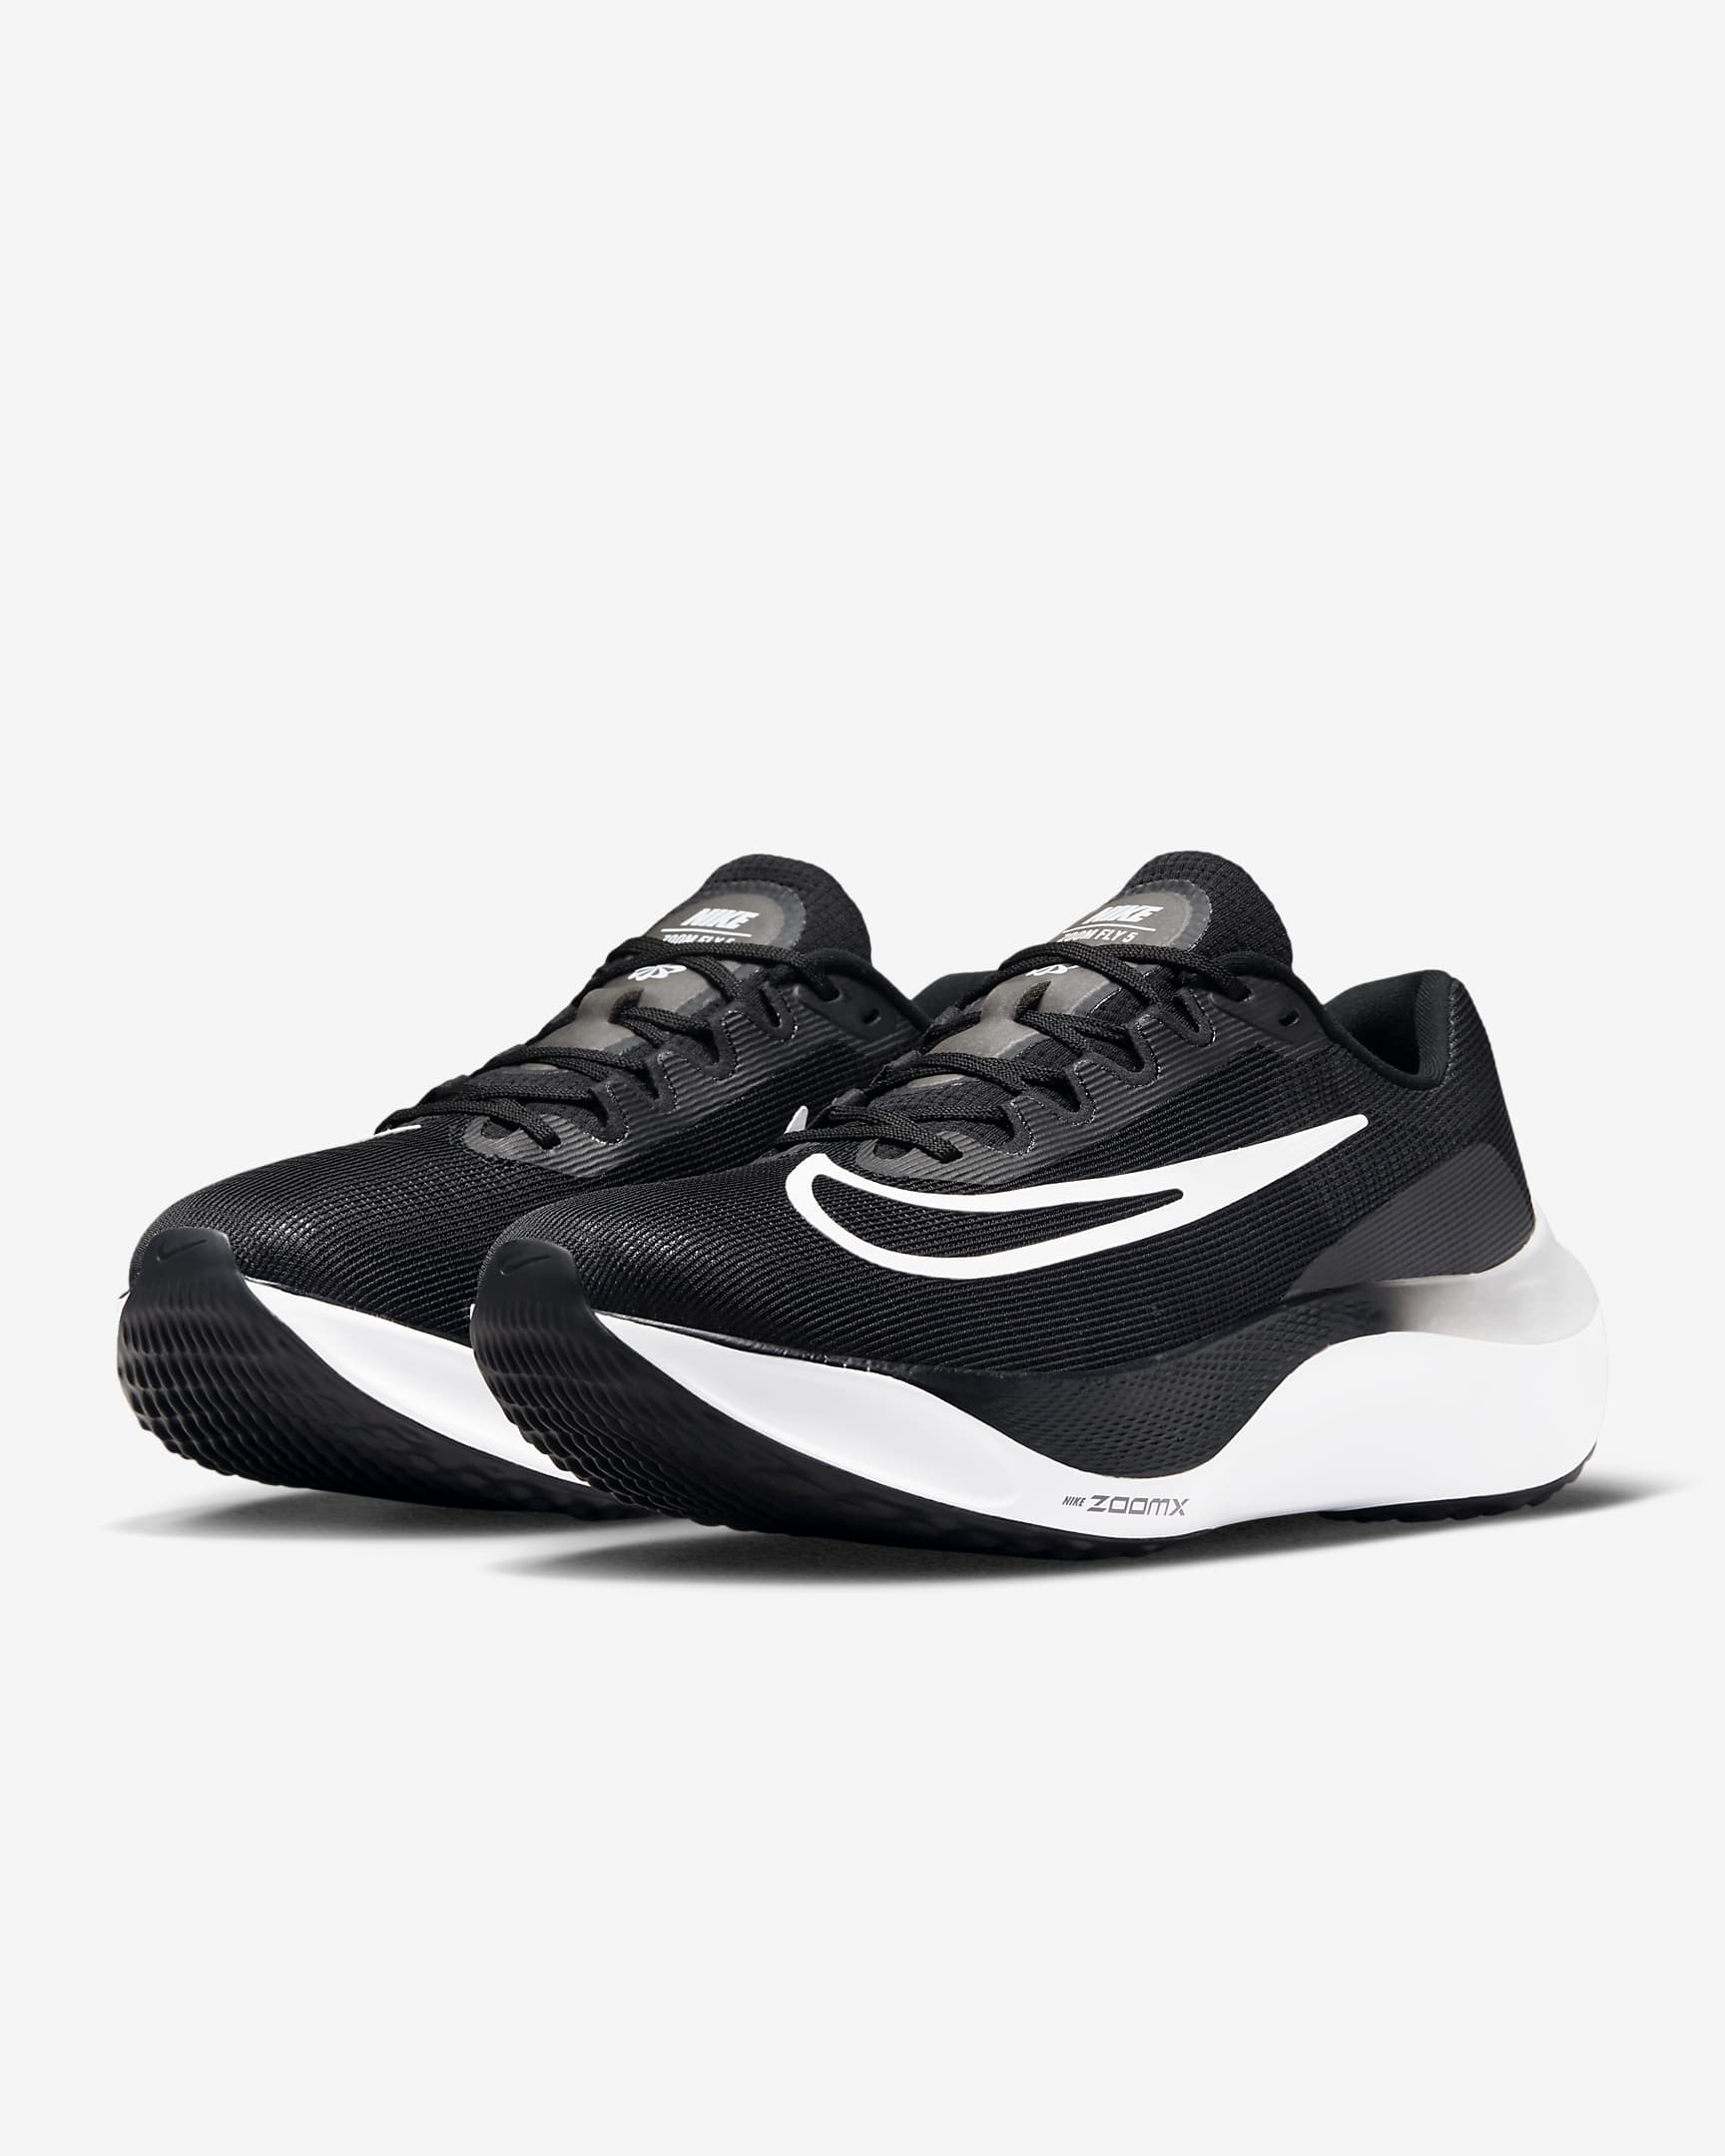 Chaussure de running sur route Nike Zoom Fly 5 pour Homme - Noir/Blanc